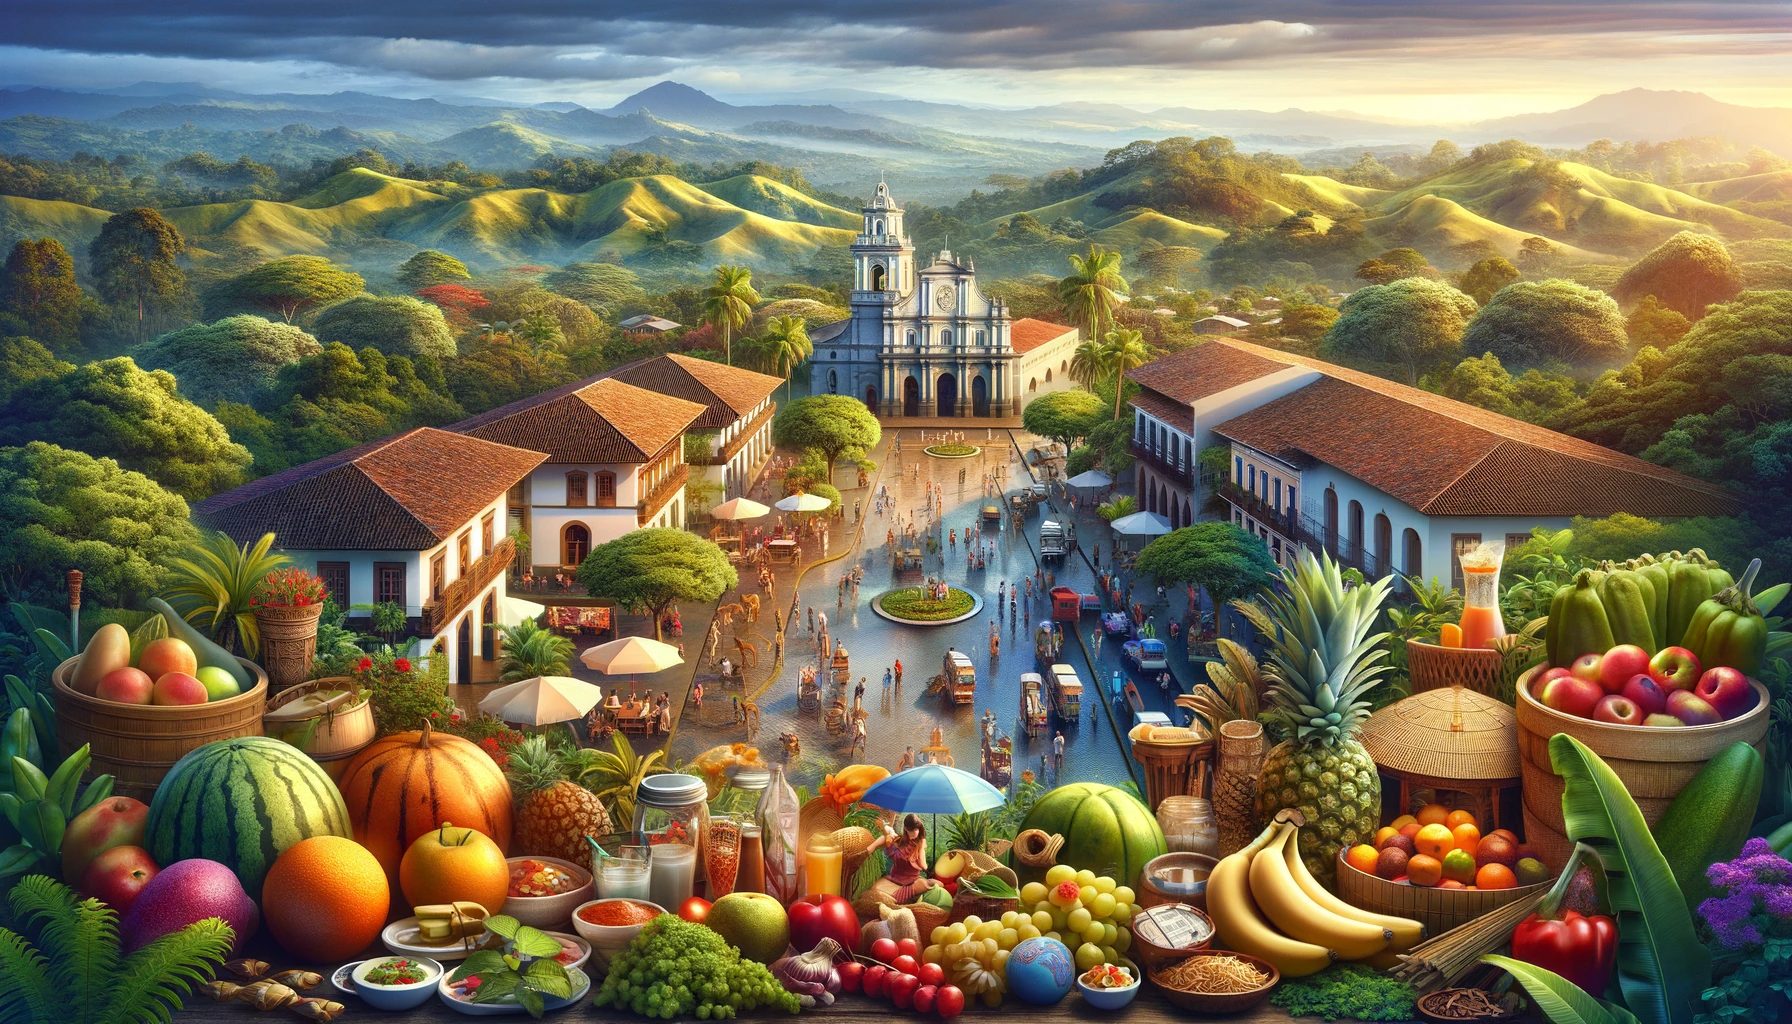 Colorful marketplace in tropical mountainous landscape